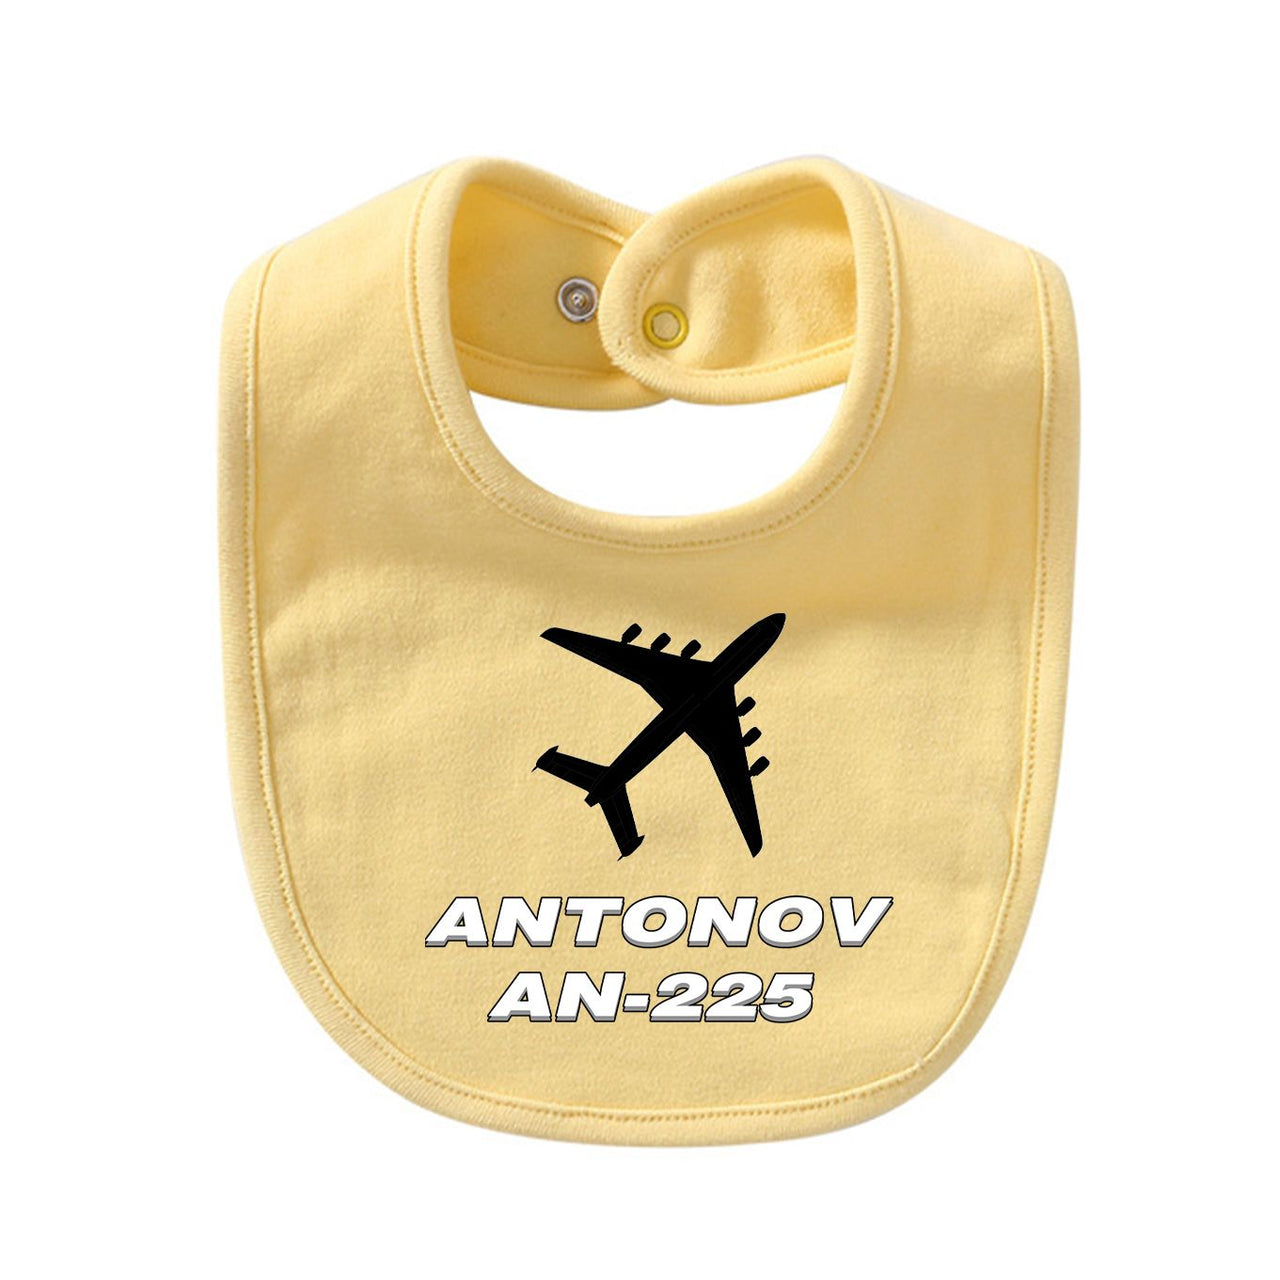 Antonov AN-225 (28) Designed Baby Saliva & Feeding Towels